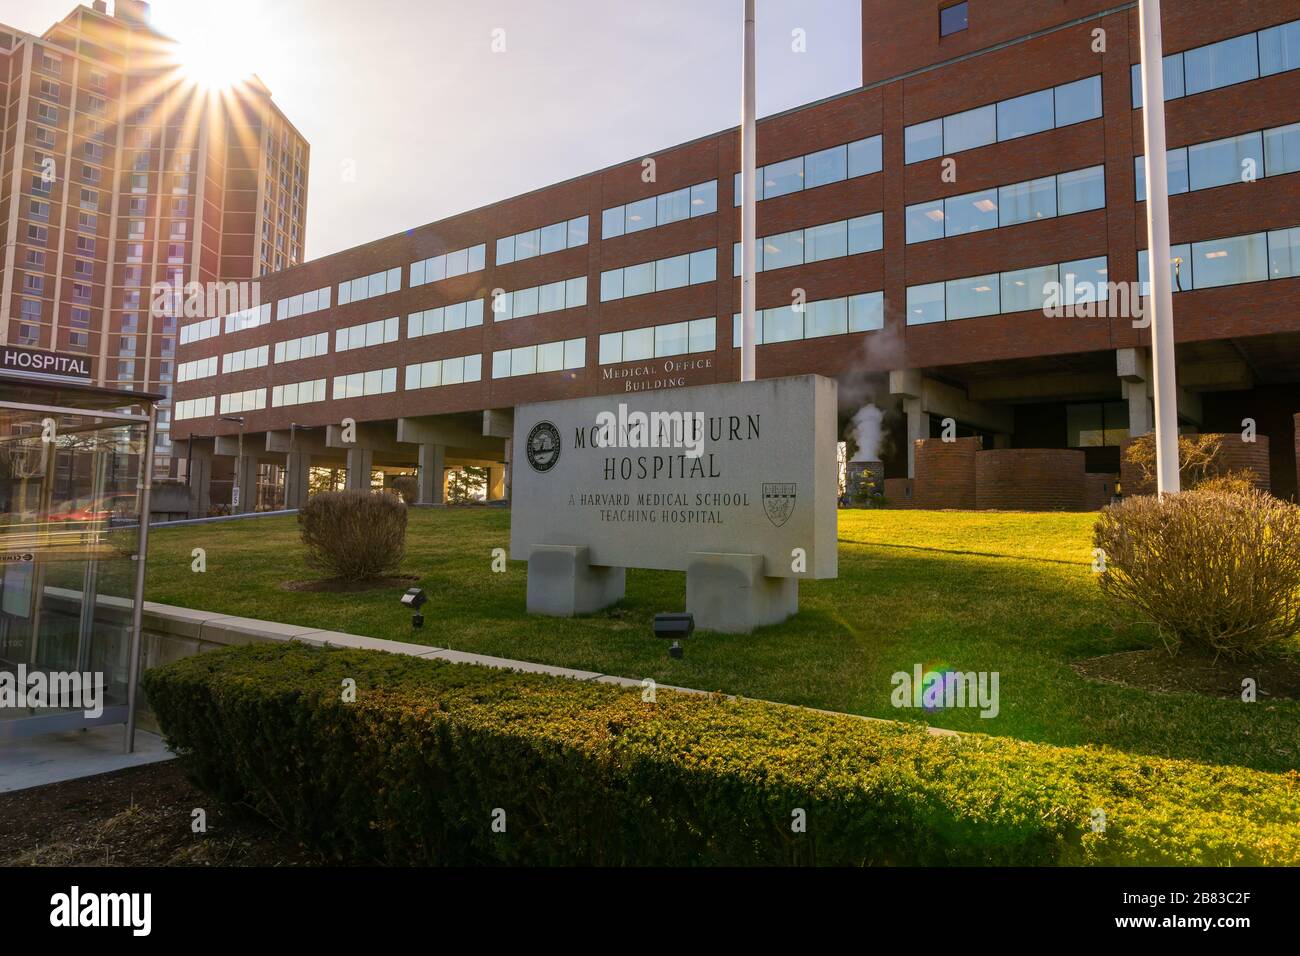 Cambridge MA USA - 16.3.2020 - Mount Auburn Hospital, ein Krankenhaus in Cambridge, Massachusetts, das der Harvard Medical School angeschlossen ist. Stockfoto